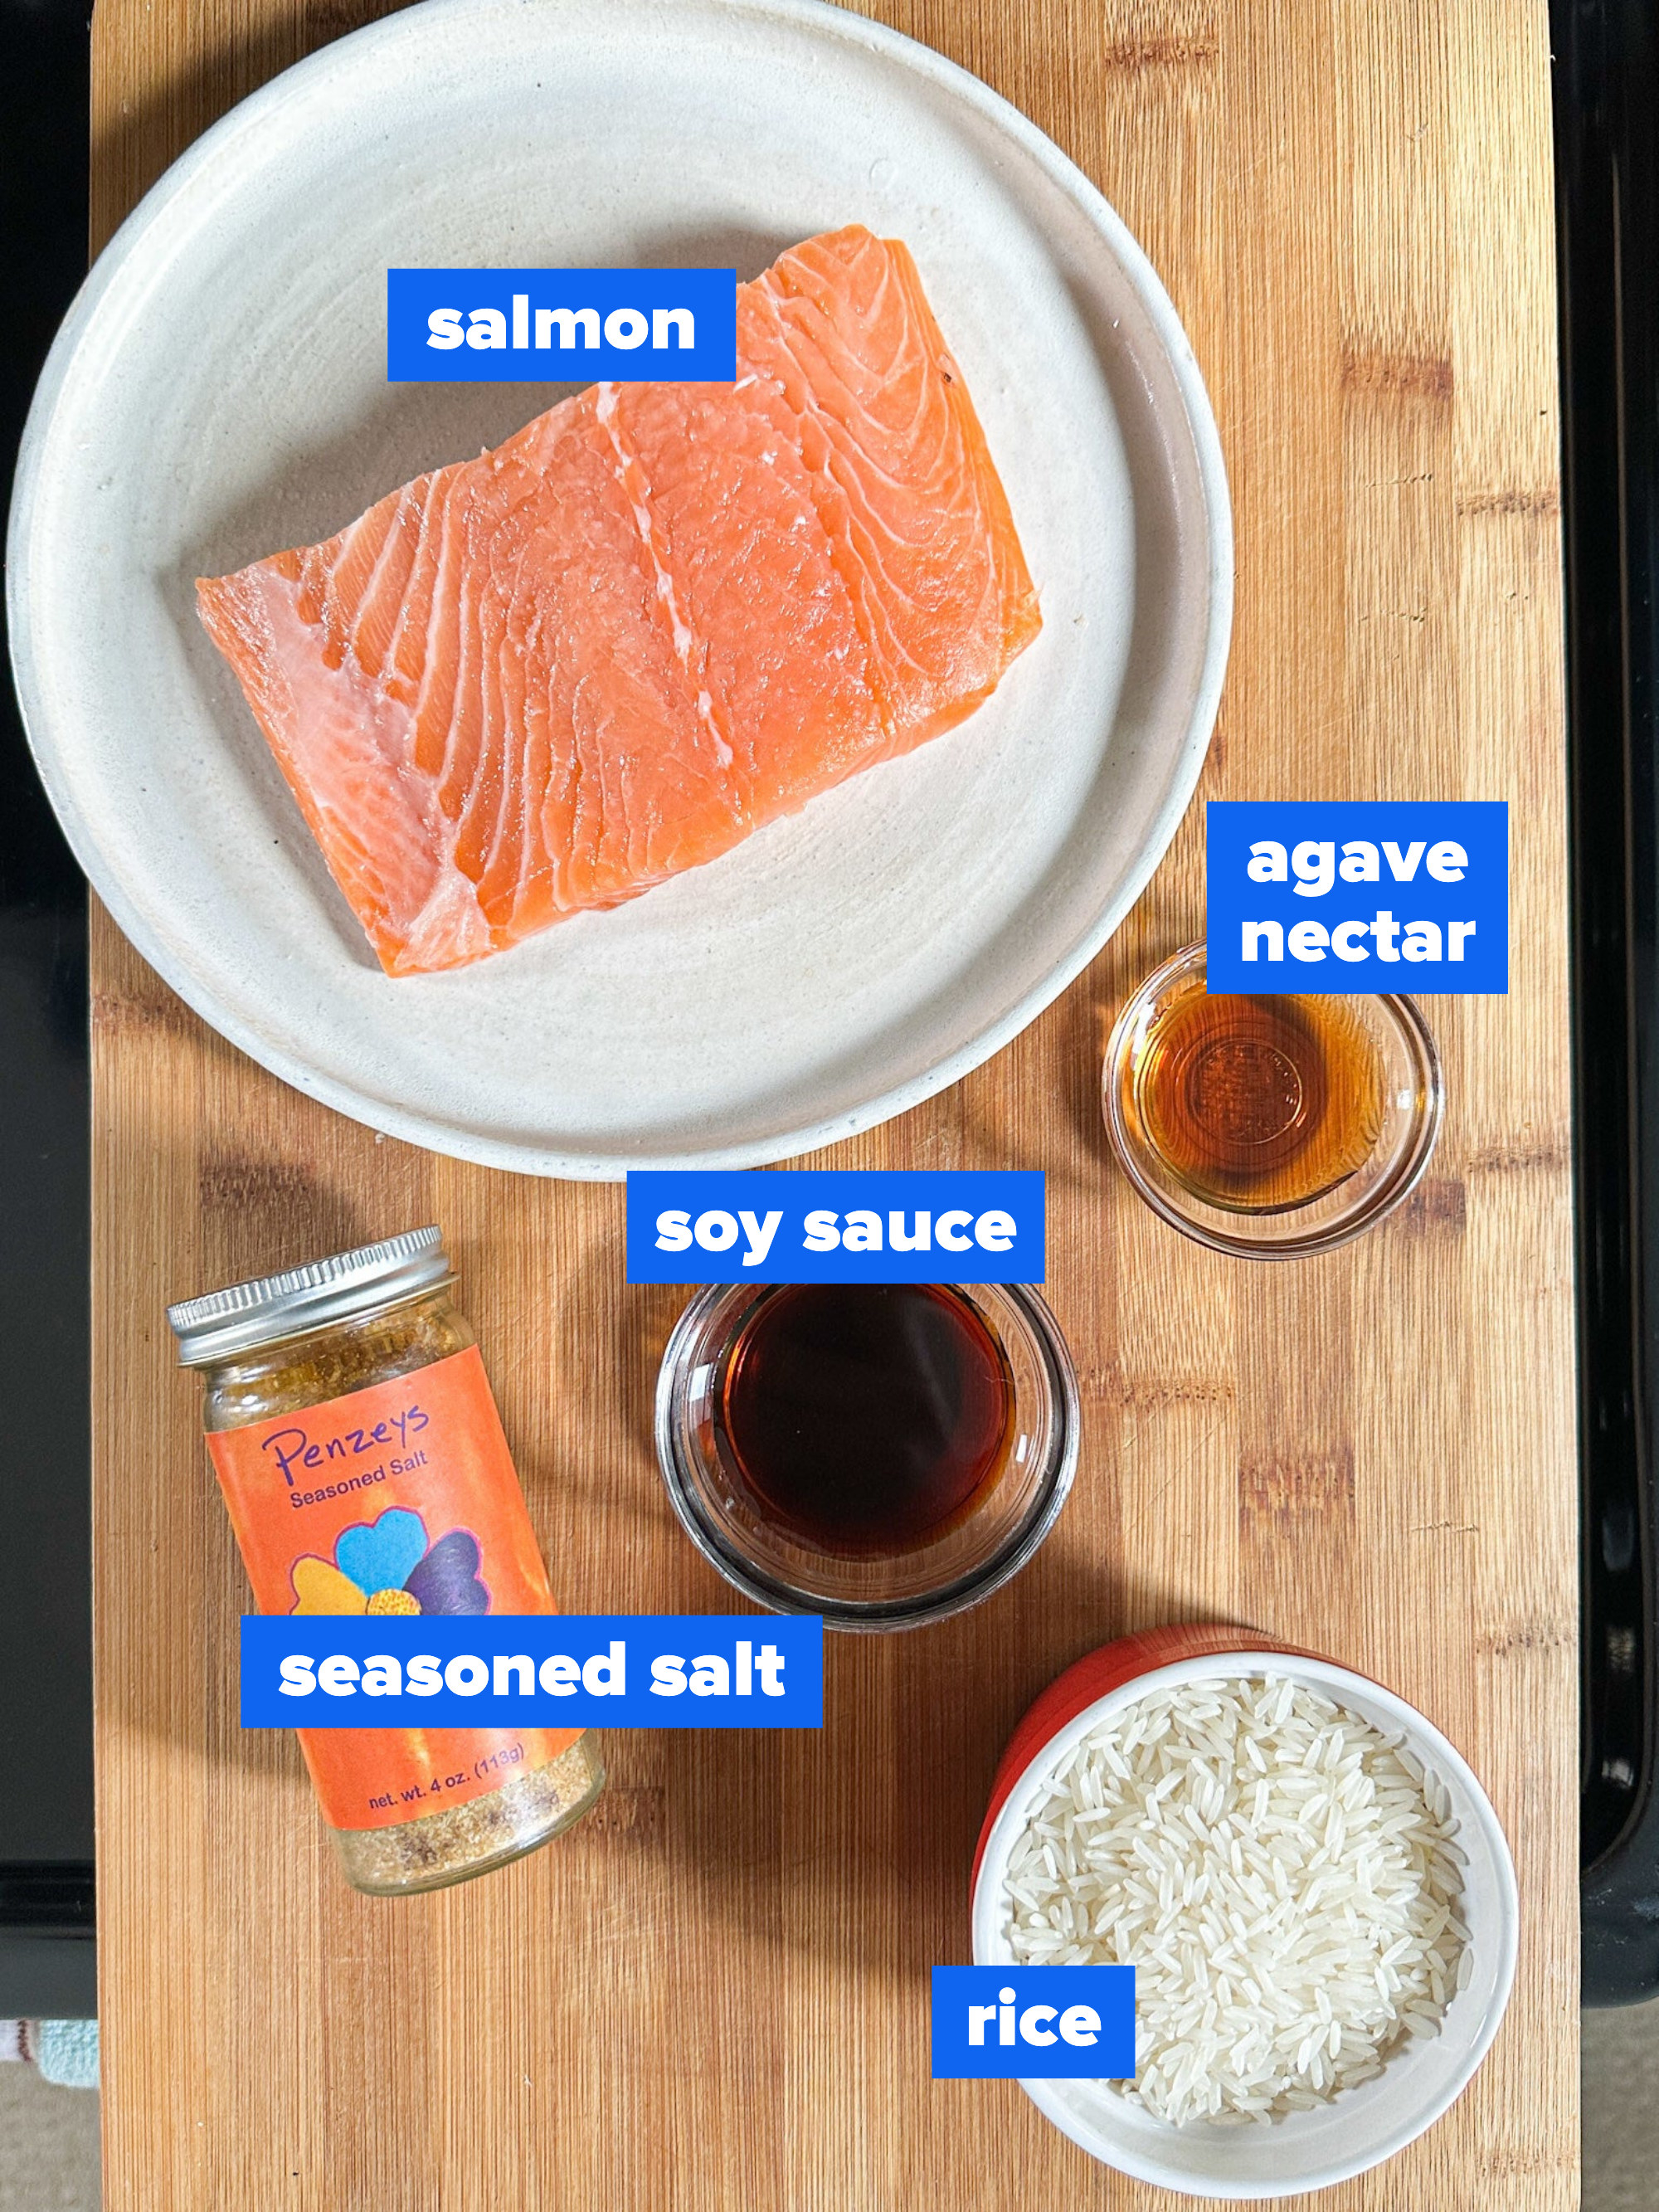 the ingredients: salmon, agave nectar, soy sauce, seasoned salt, rice